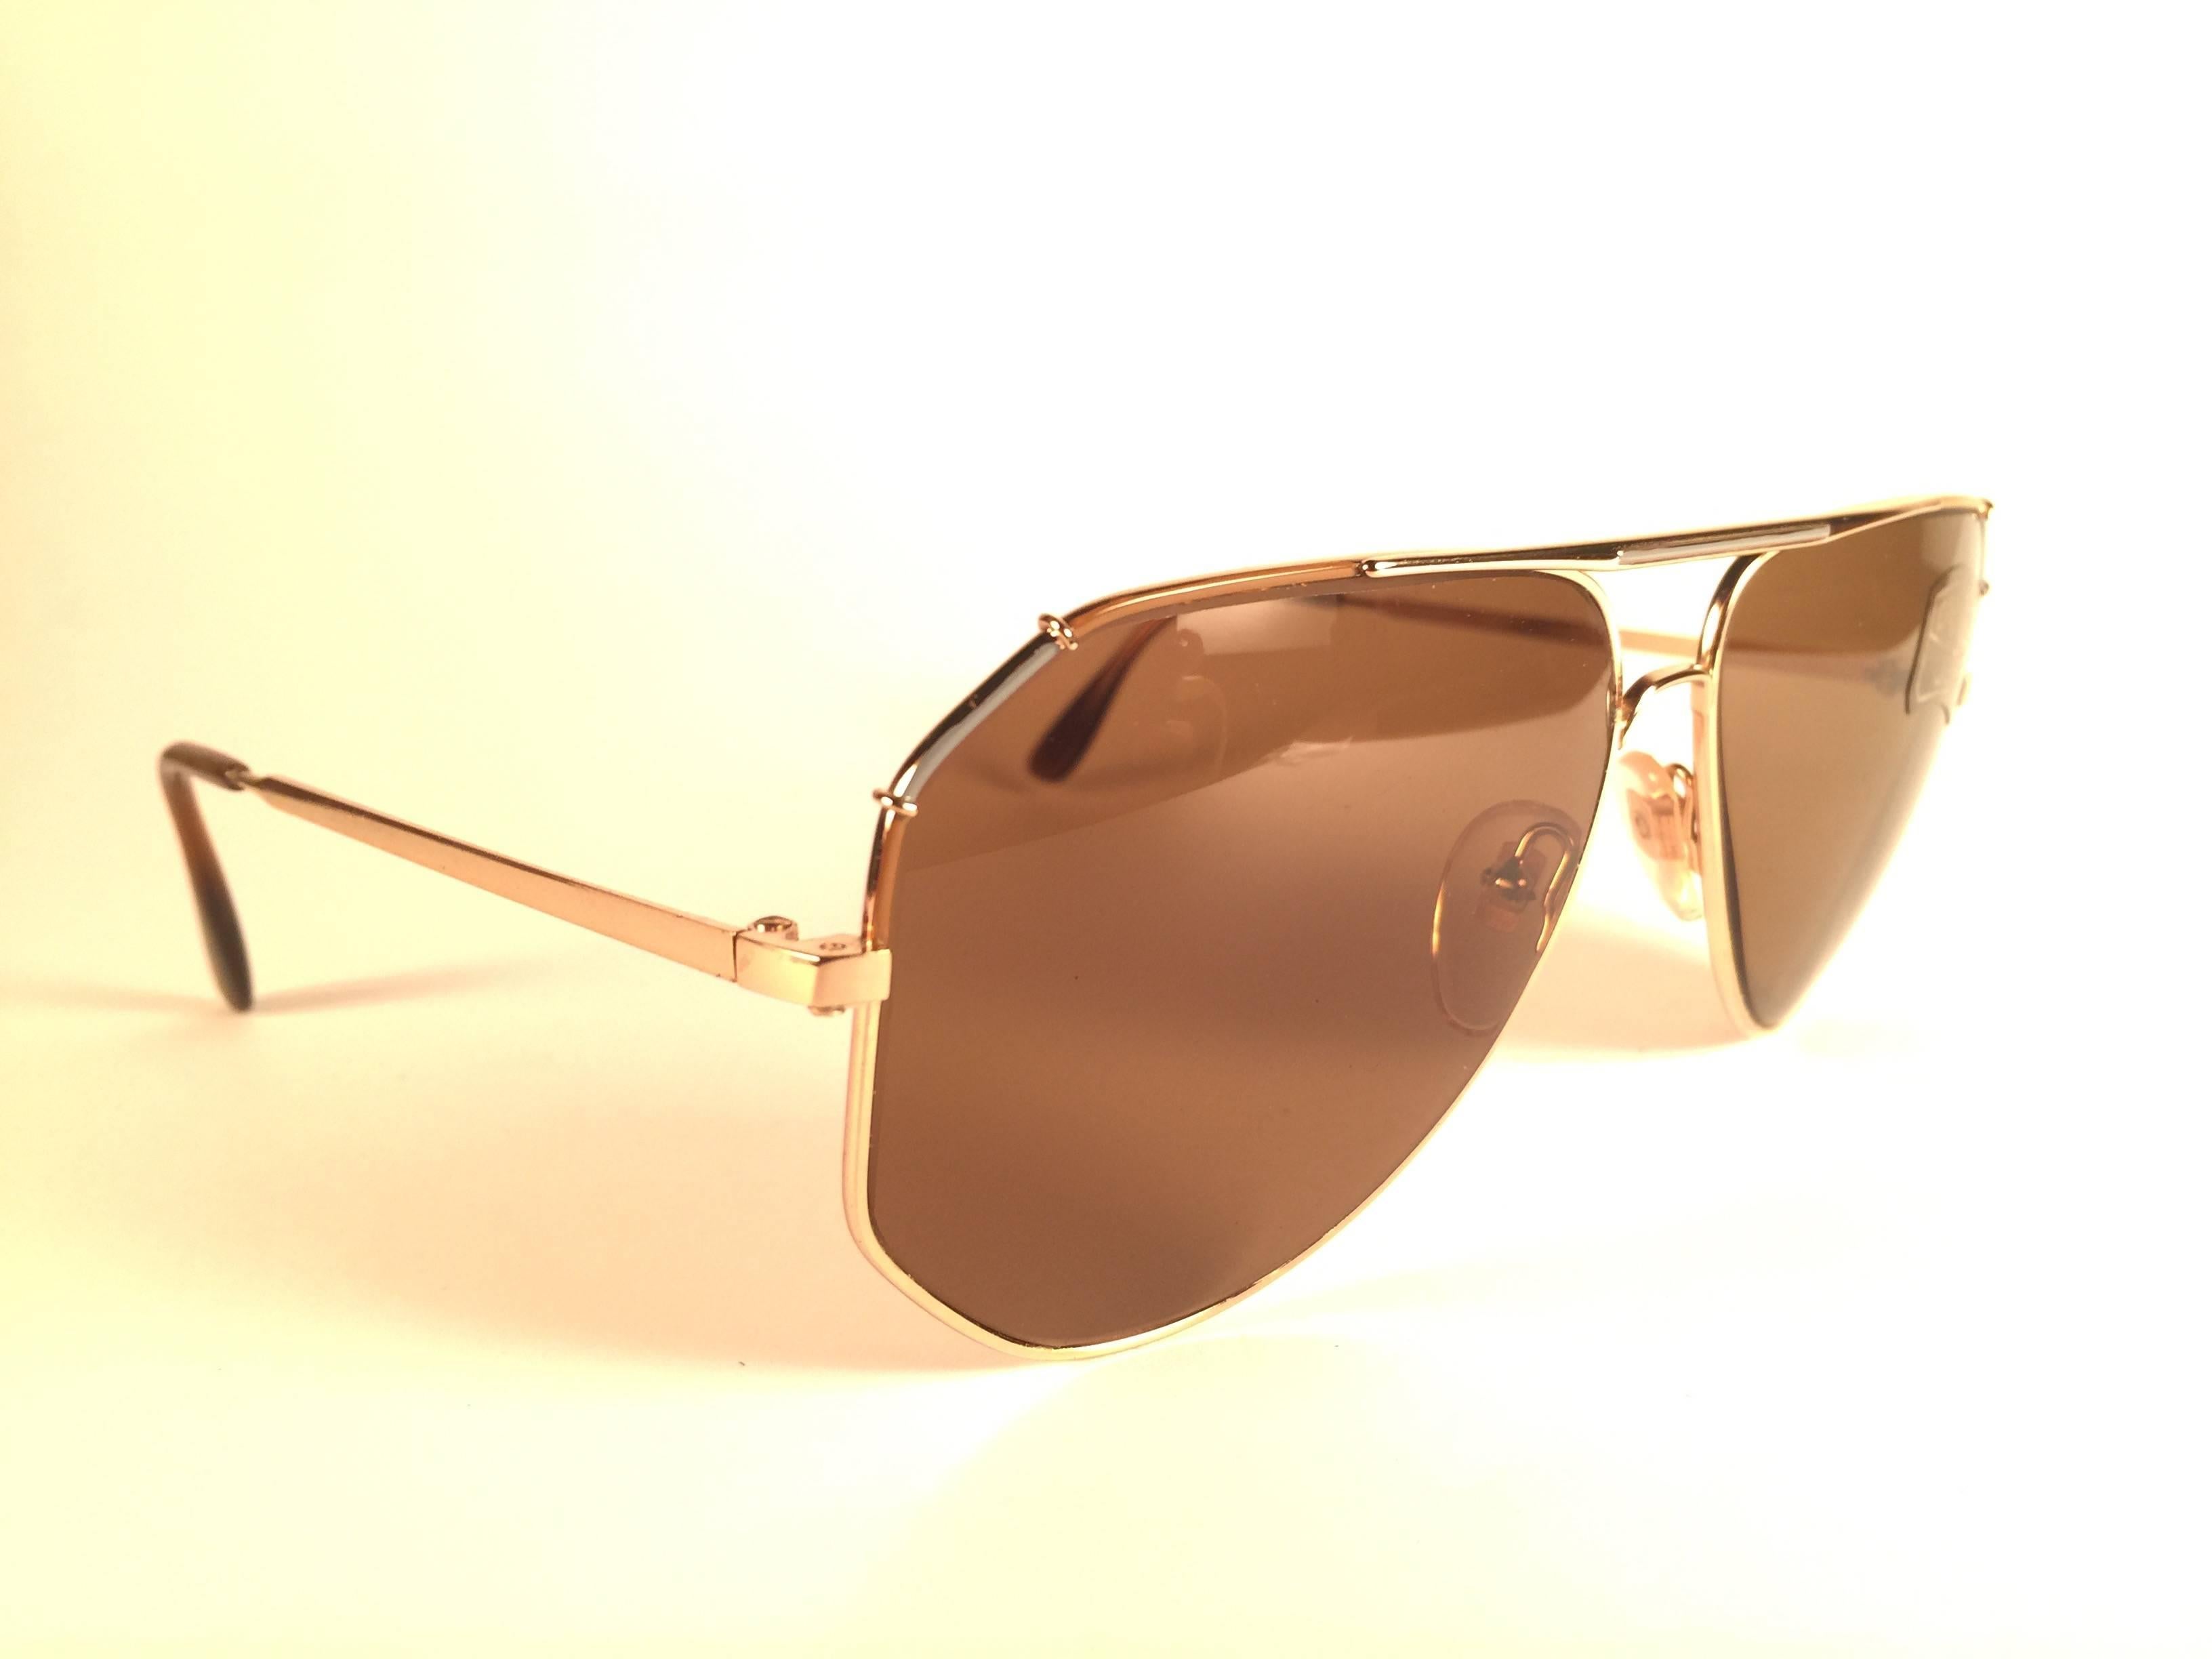 carl zeiss aviator sunglasses